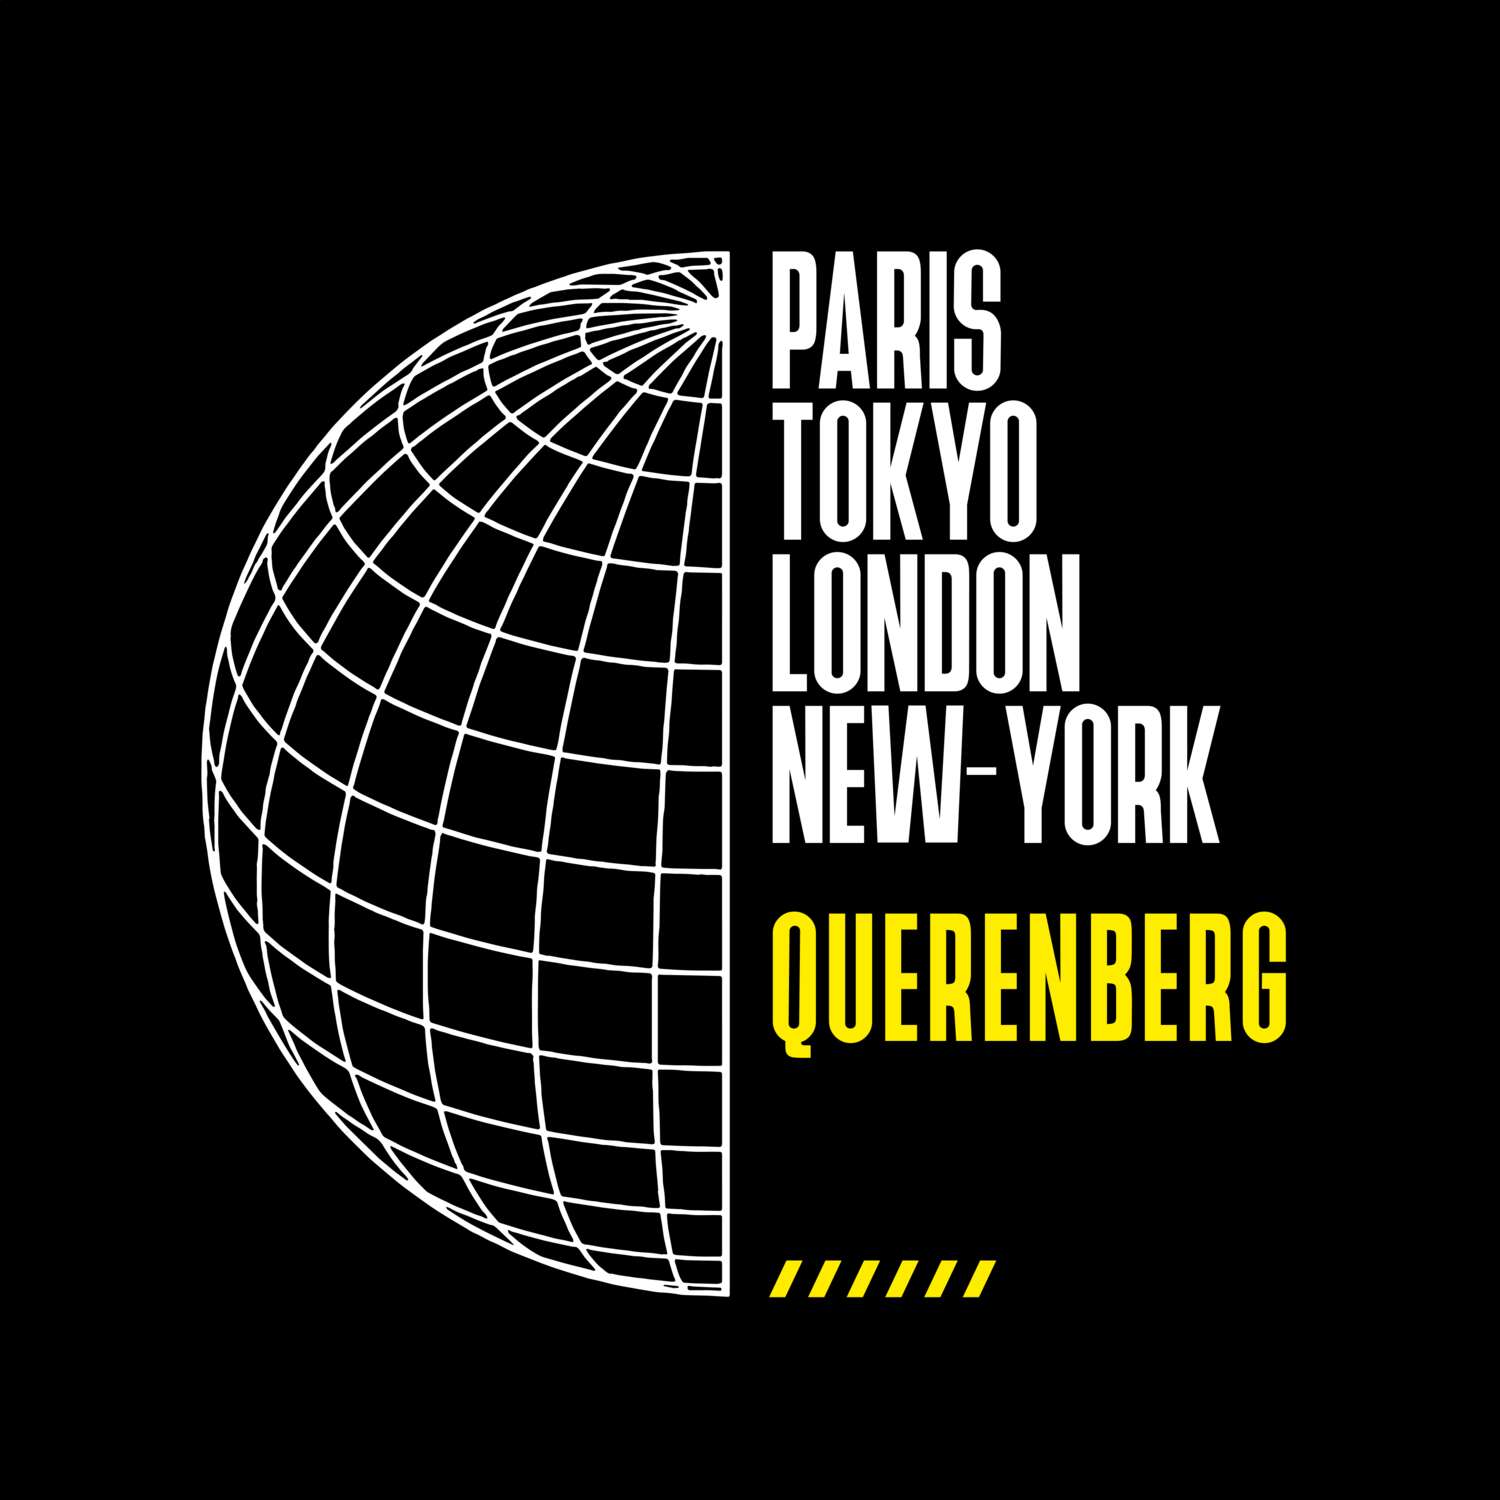 Querenberg T-Shirt »Paris Tokyo London«